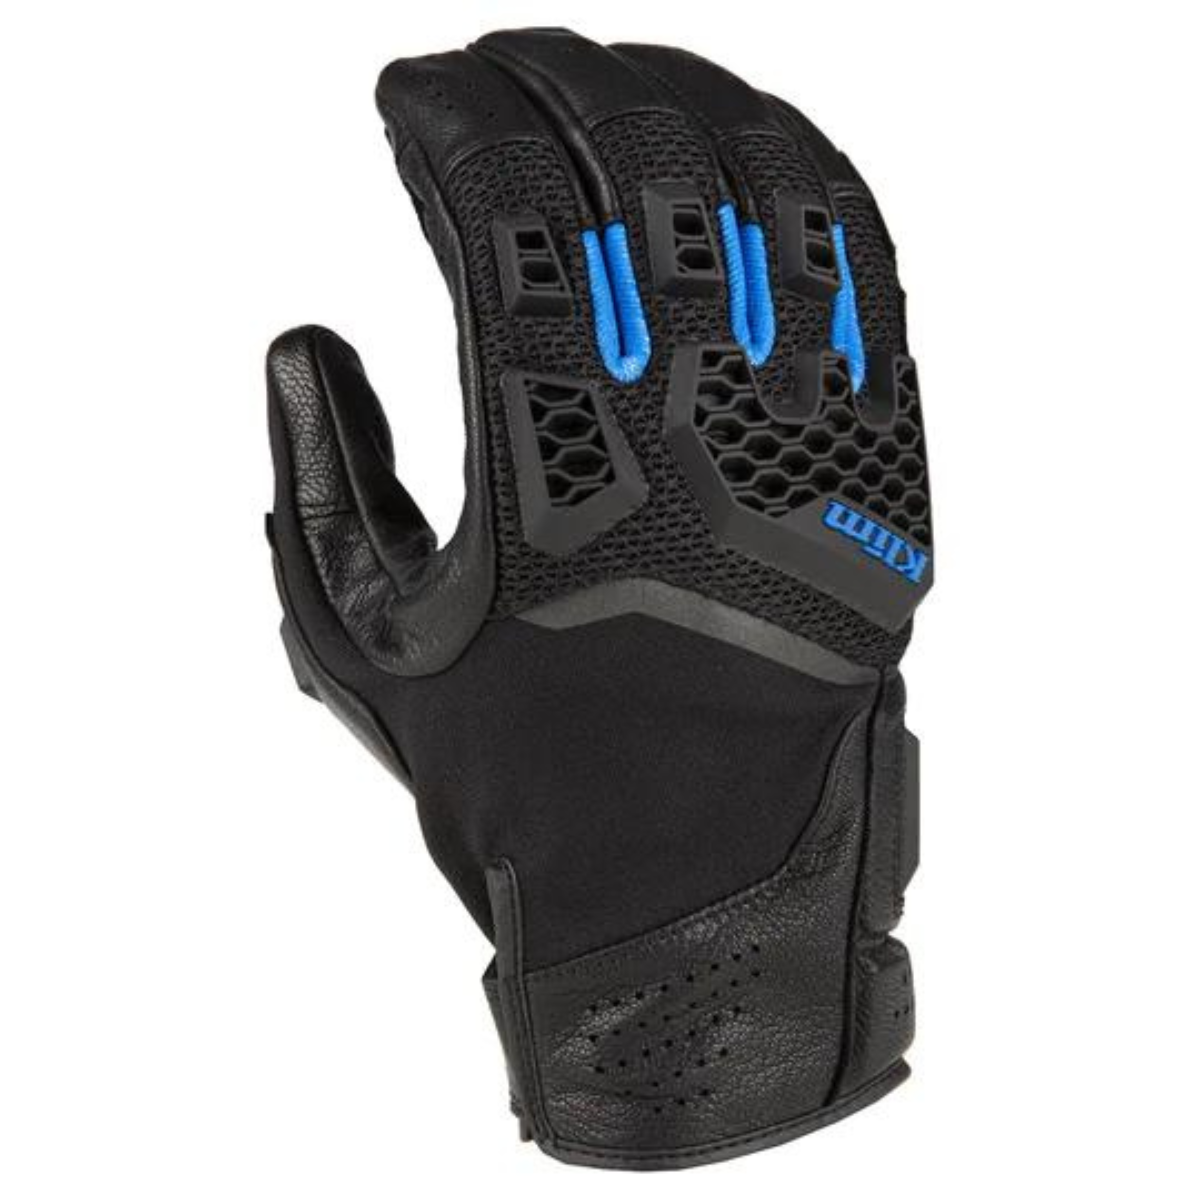 Klim Baja S4 Glove Black Kinetik Blue Glove for motorcycles front view